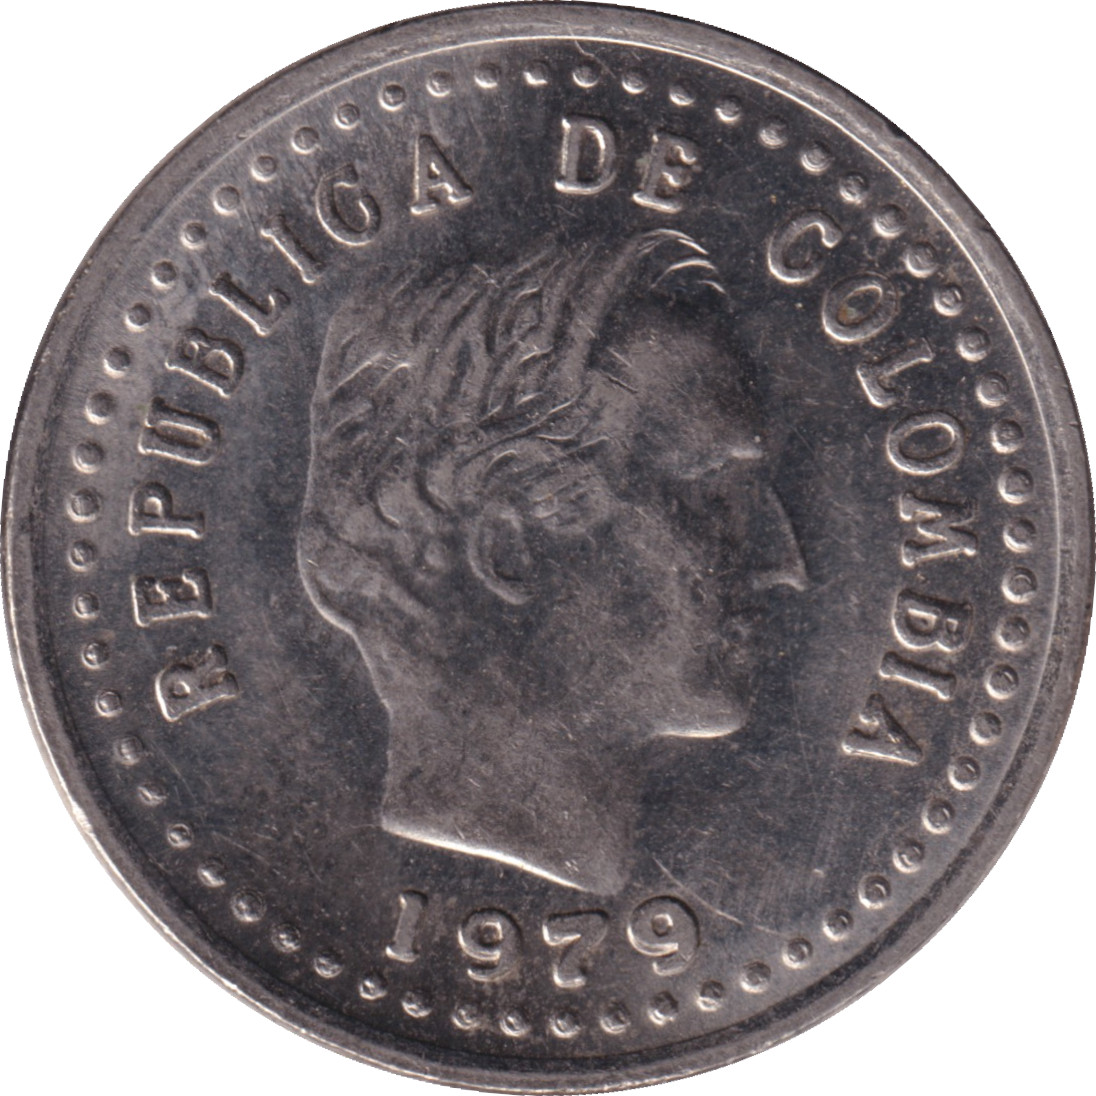 20 centavos - Santander - Petite tête